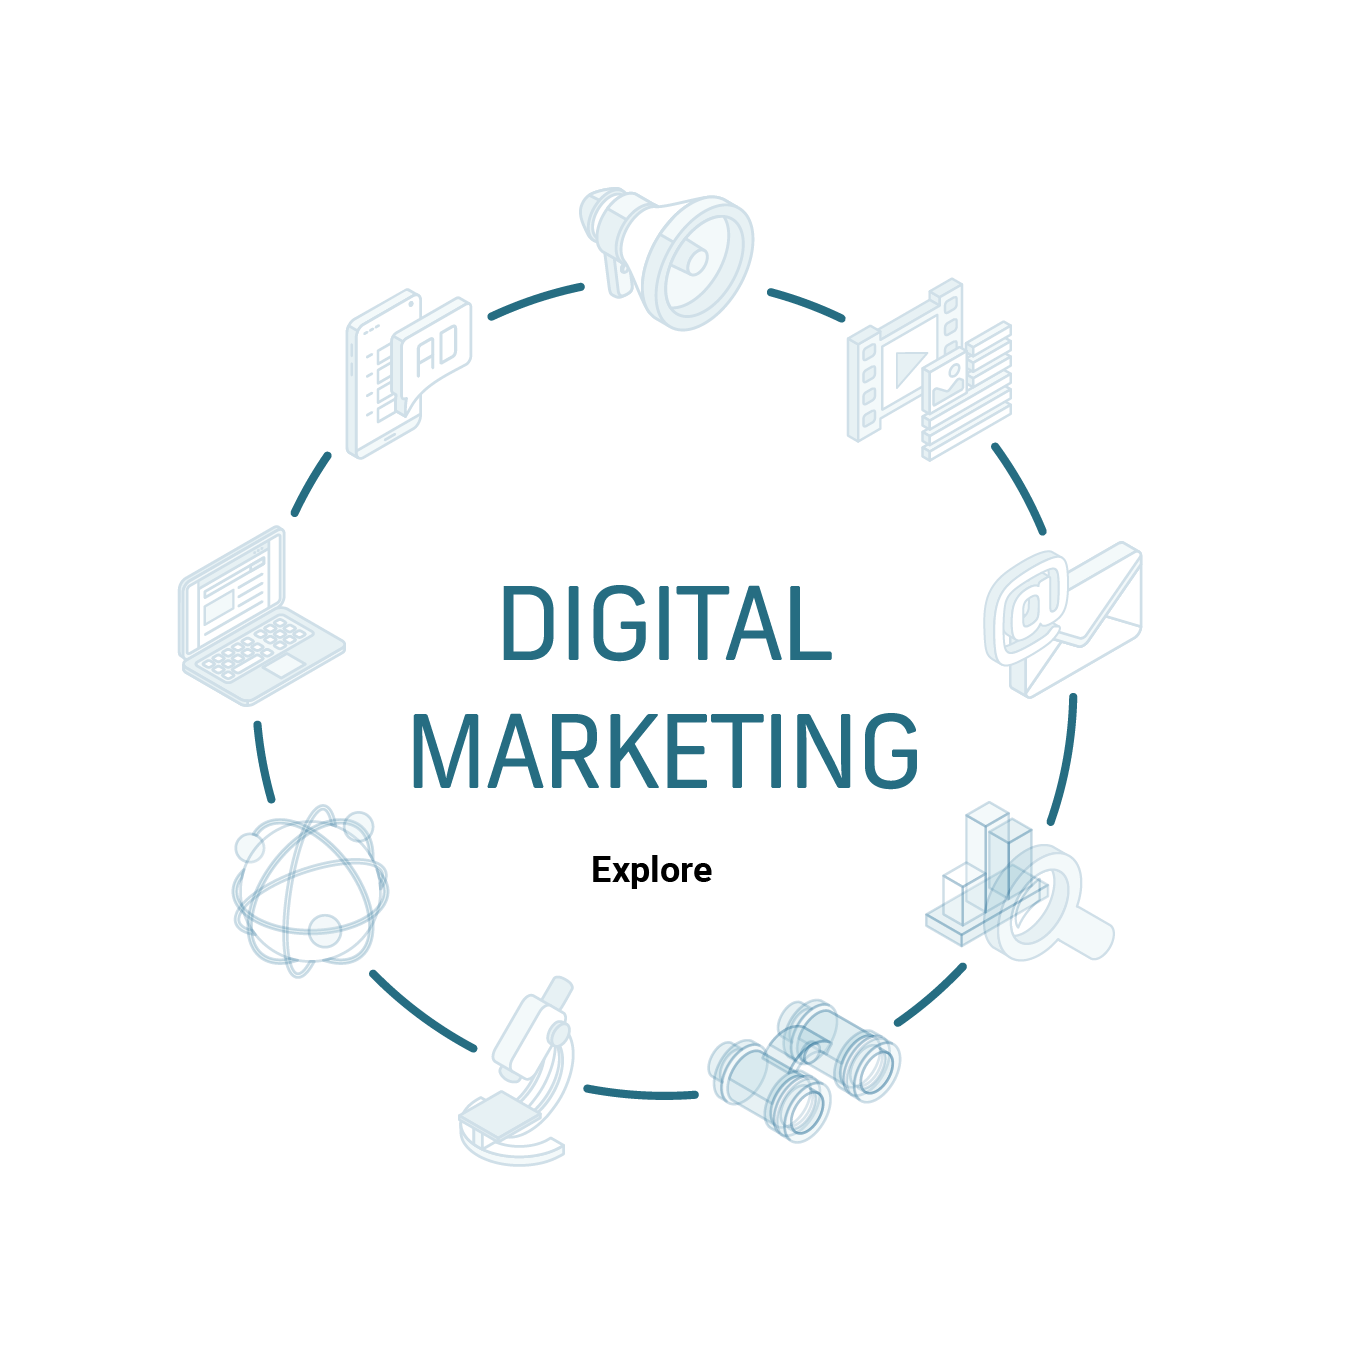 Ys digital marketing services